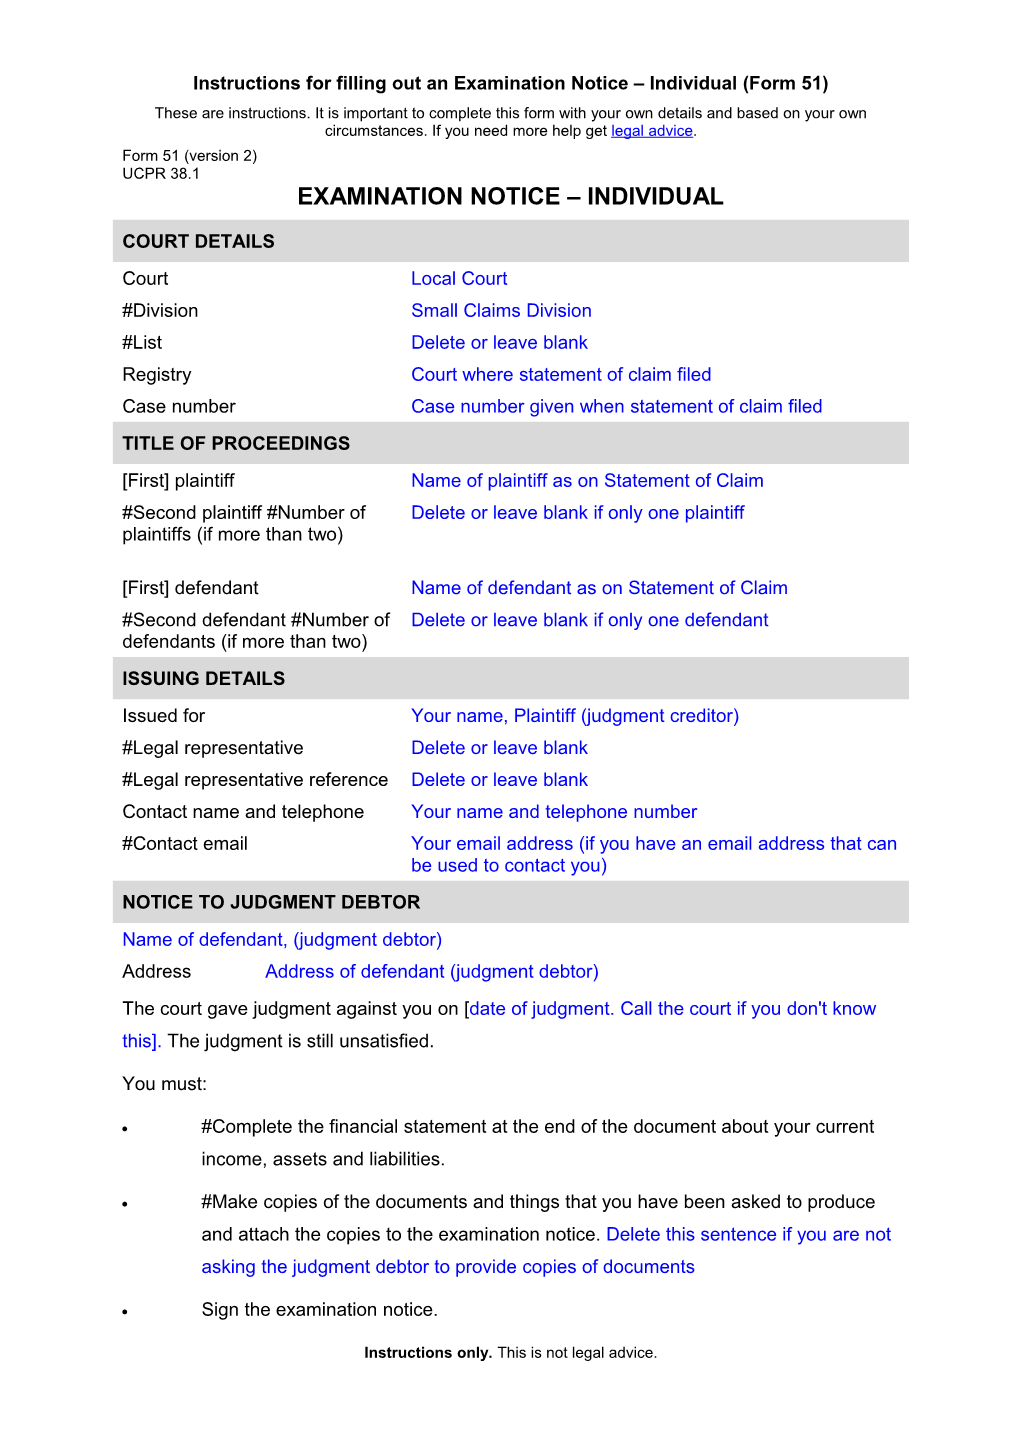 NSW UCPR Form 51 - Examination Notice - Individual